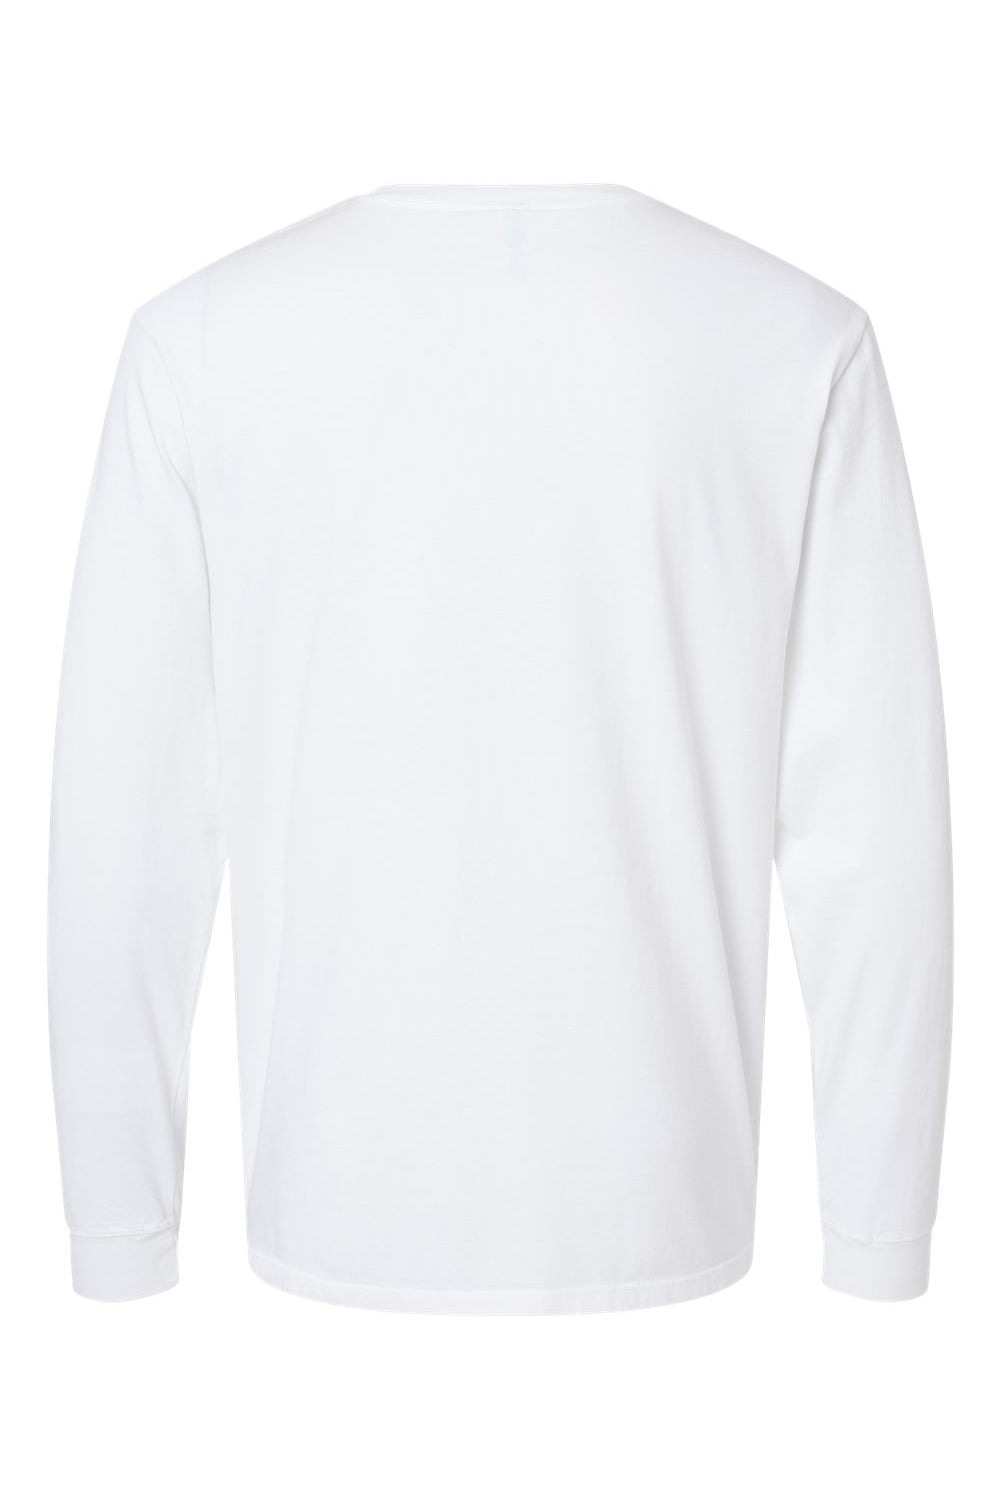 SoftShirts 420 Mens Organic Long Sleeve Crewneck T-Shirt White Flat Back